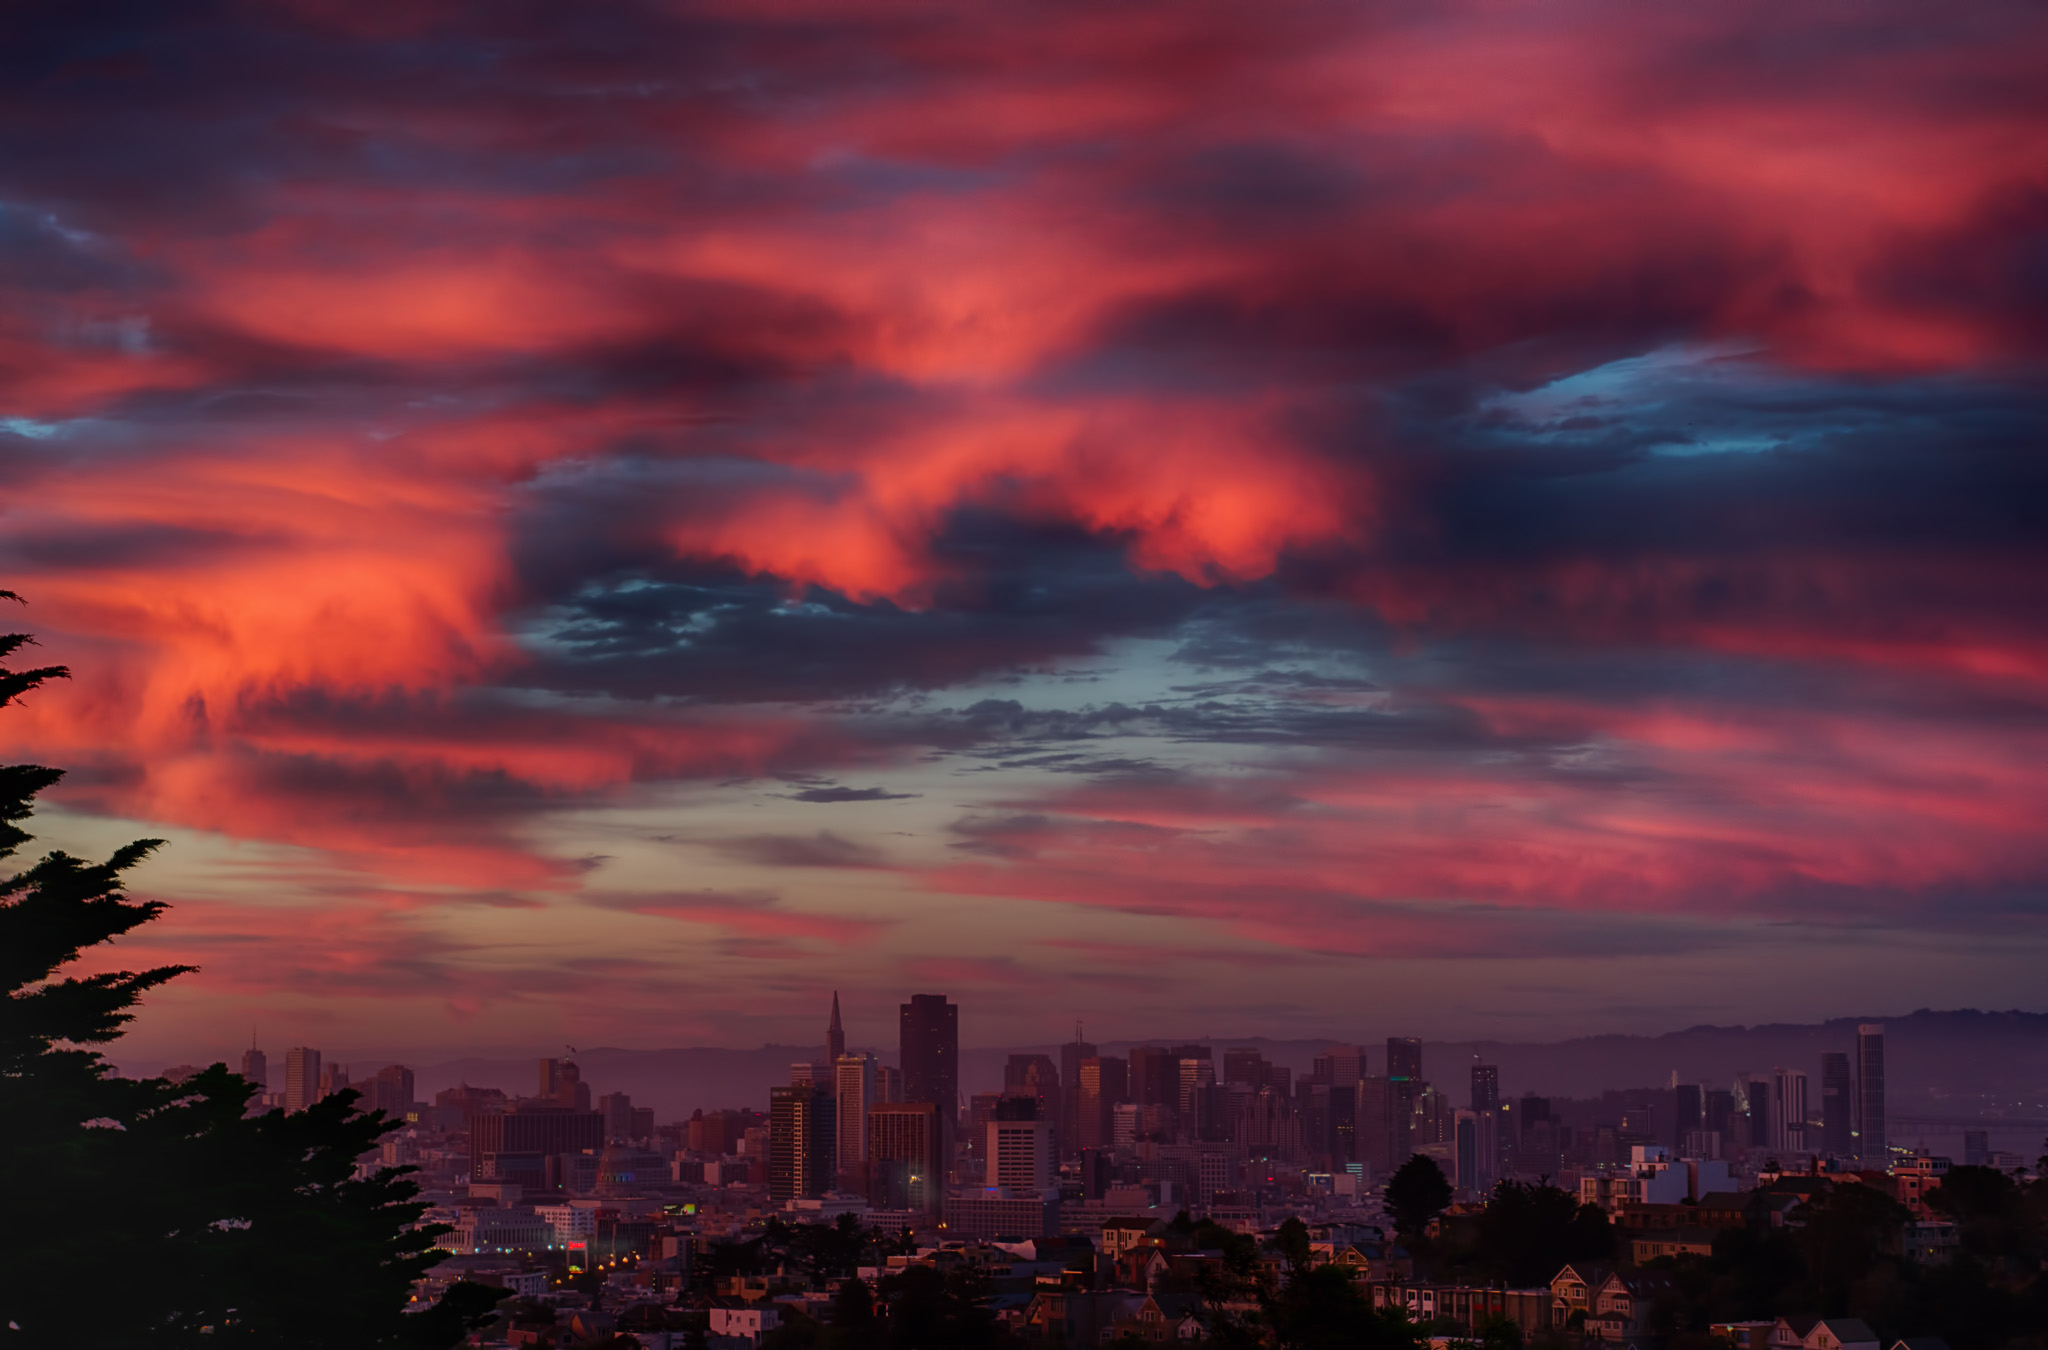 Last Light of Summer Solstice over San Francisco